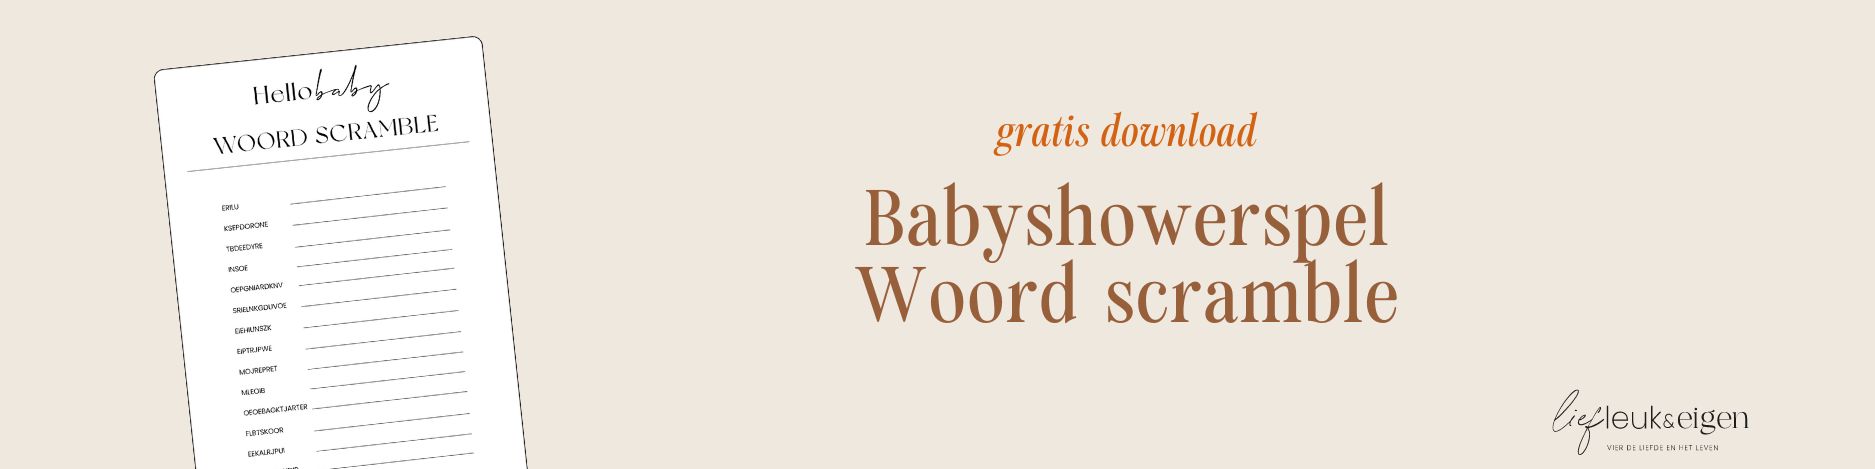 Babyshower spel woord scramble